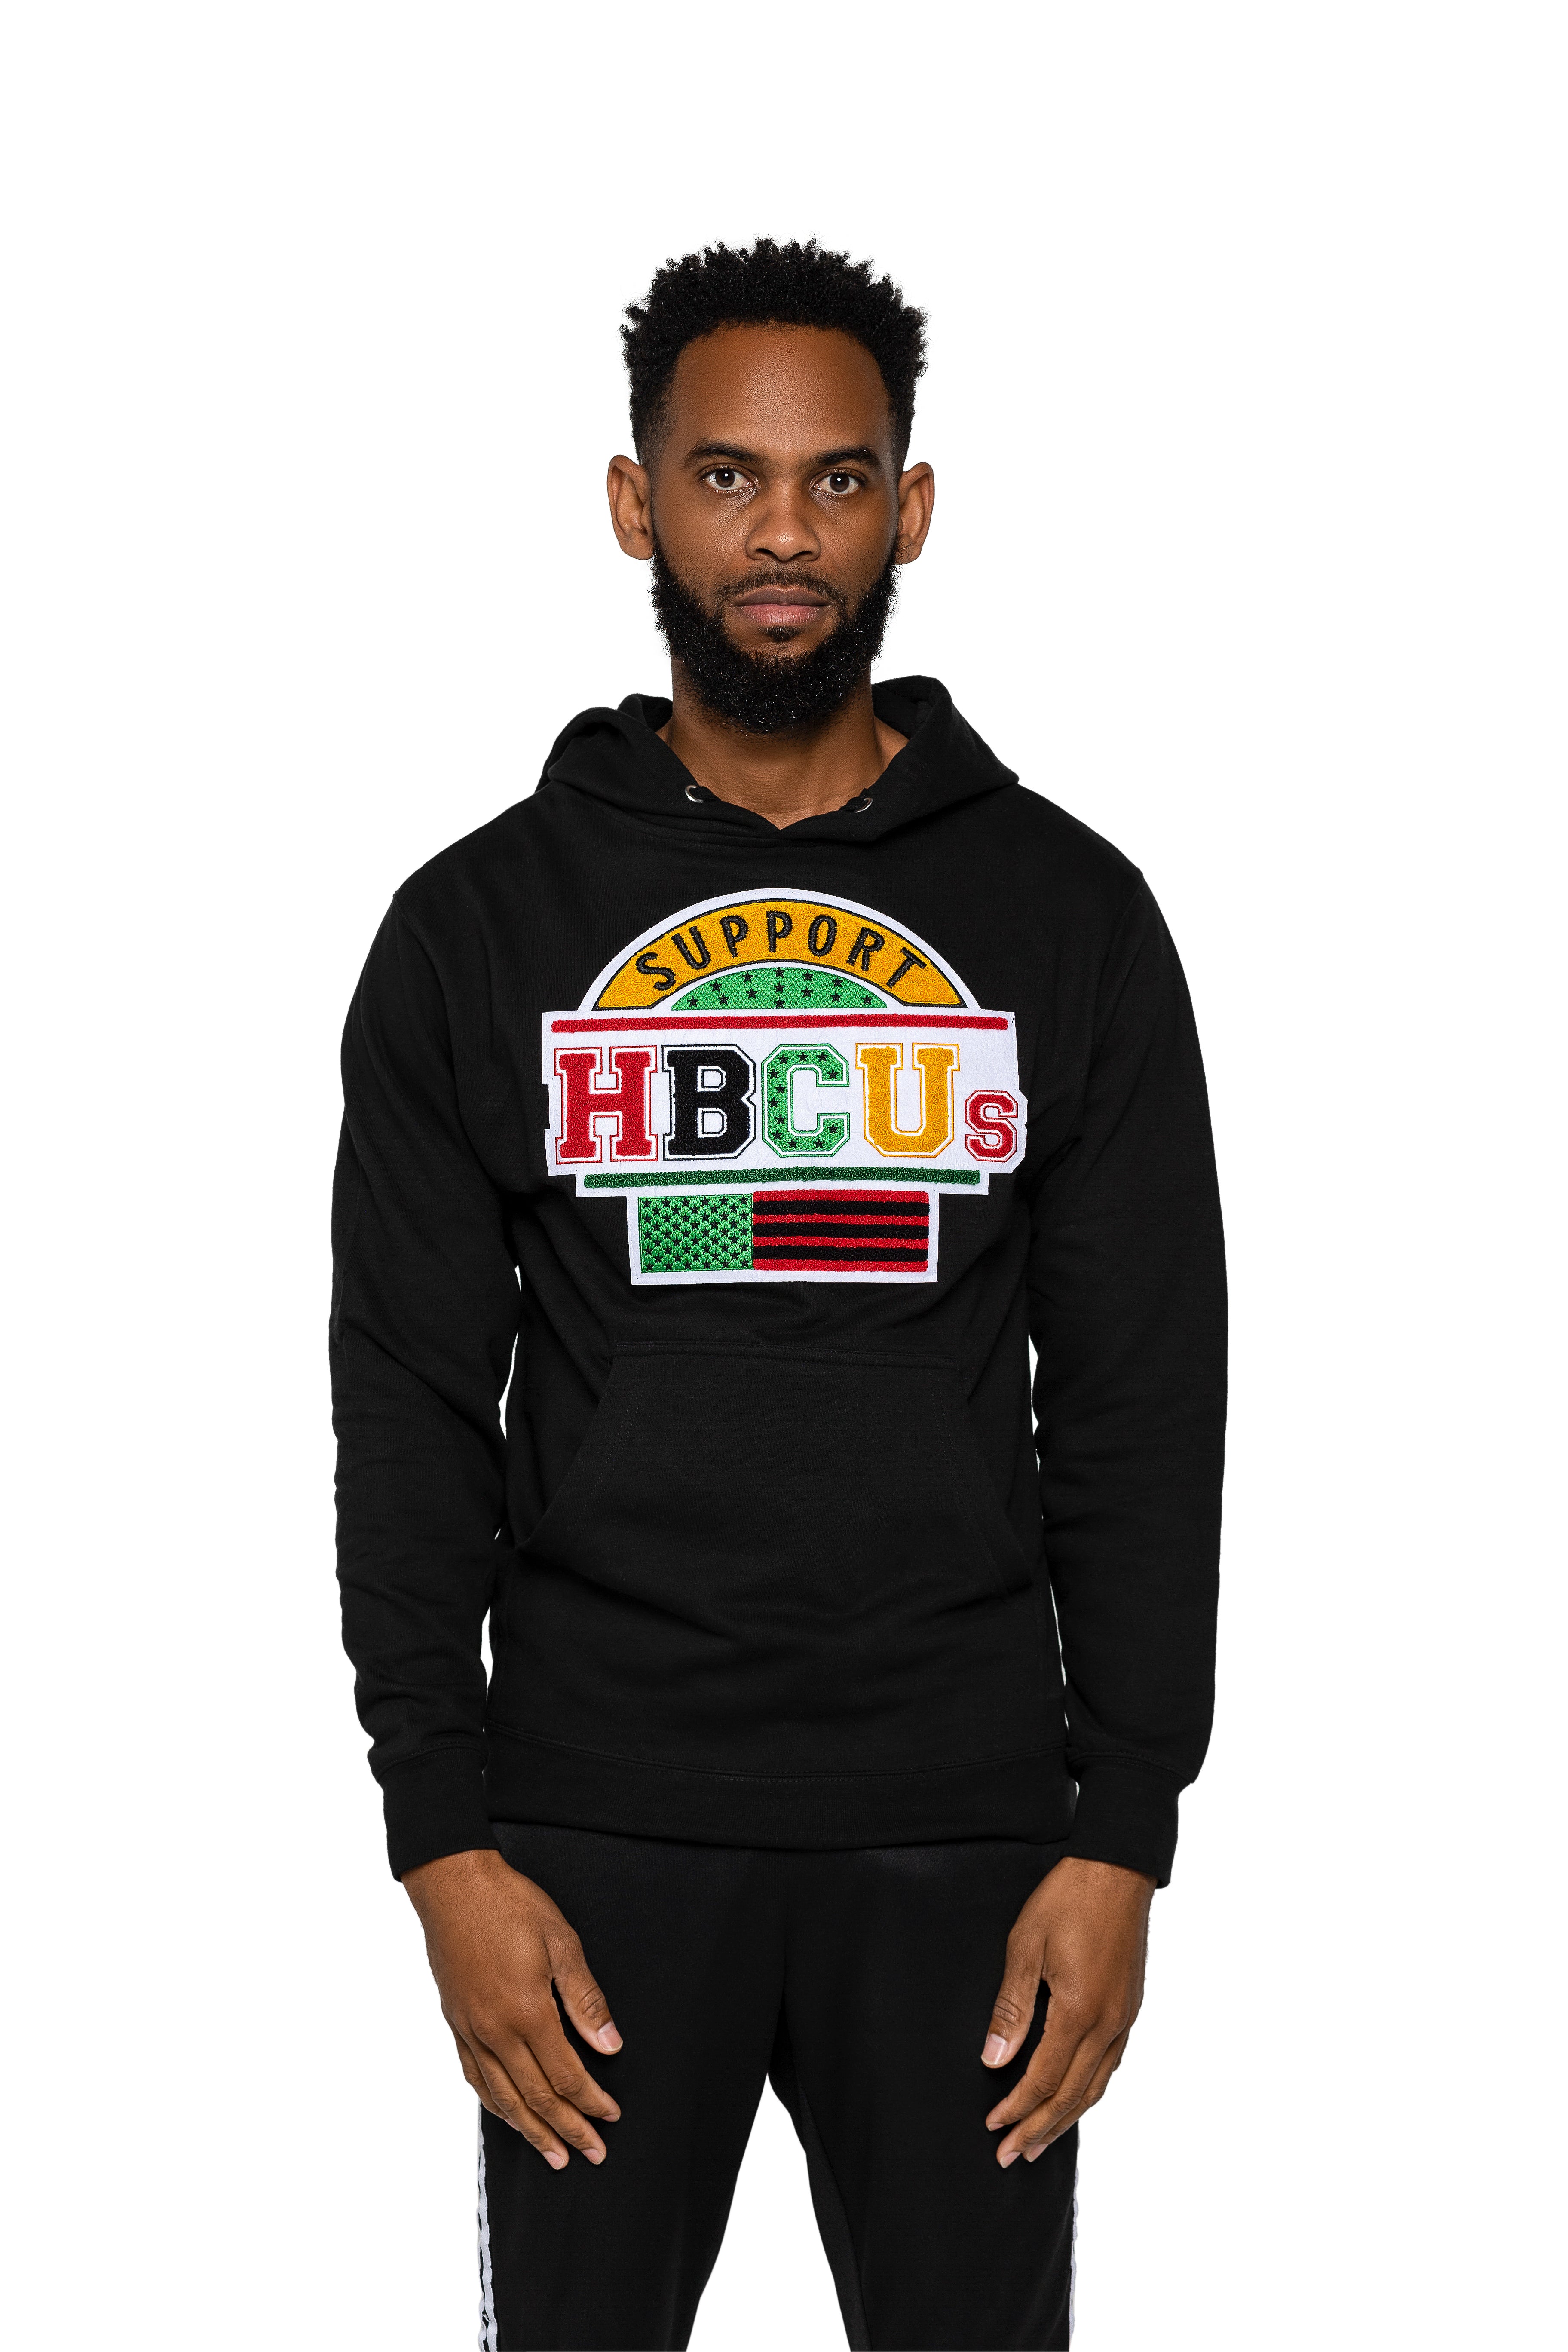 SUPPORT HBCUs - BLACK HOODIE